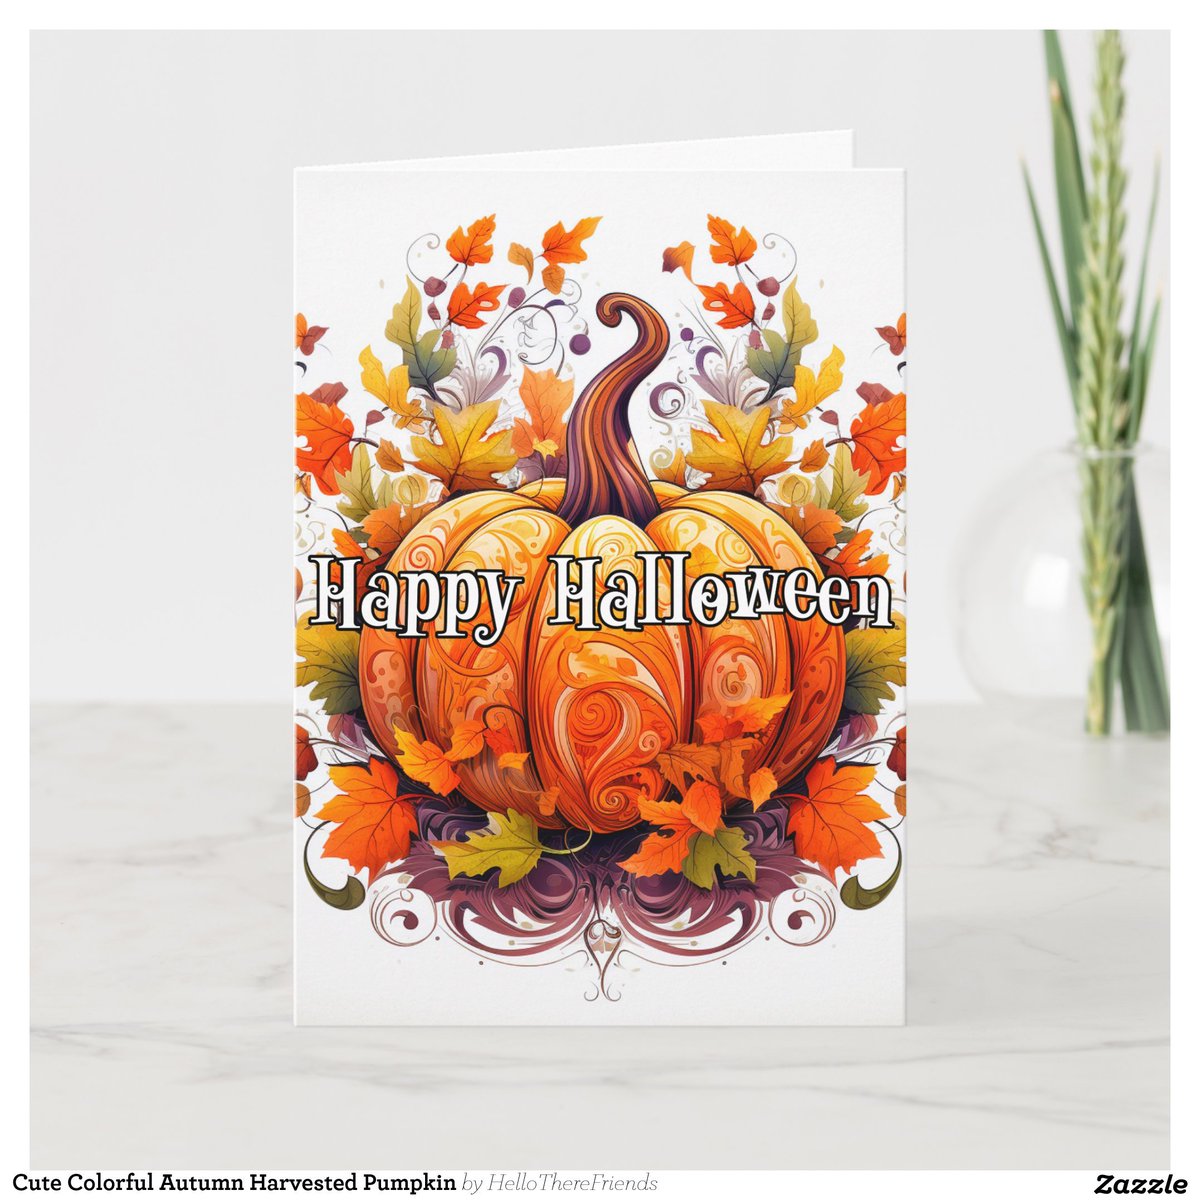 Cute Colorful Autumn Harvested Pumpkin Card→zazzle.com/z/737rc2sn?rf=…

#Postcards #Hello #Stationery #HappyHalloween #Halloween #Pumpkins #Halloween2024 #TrickOrTreat #HauntedHouse #Zazzle